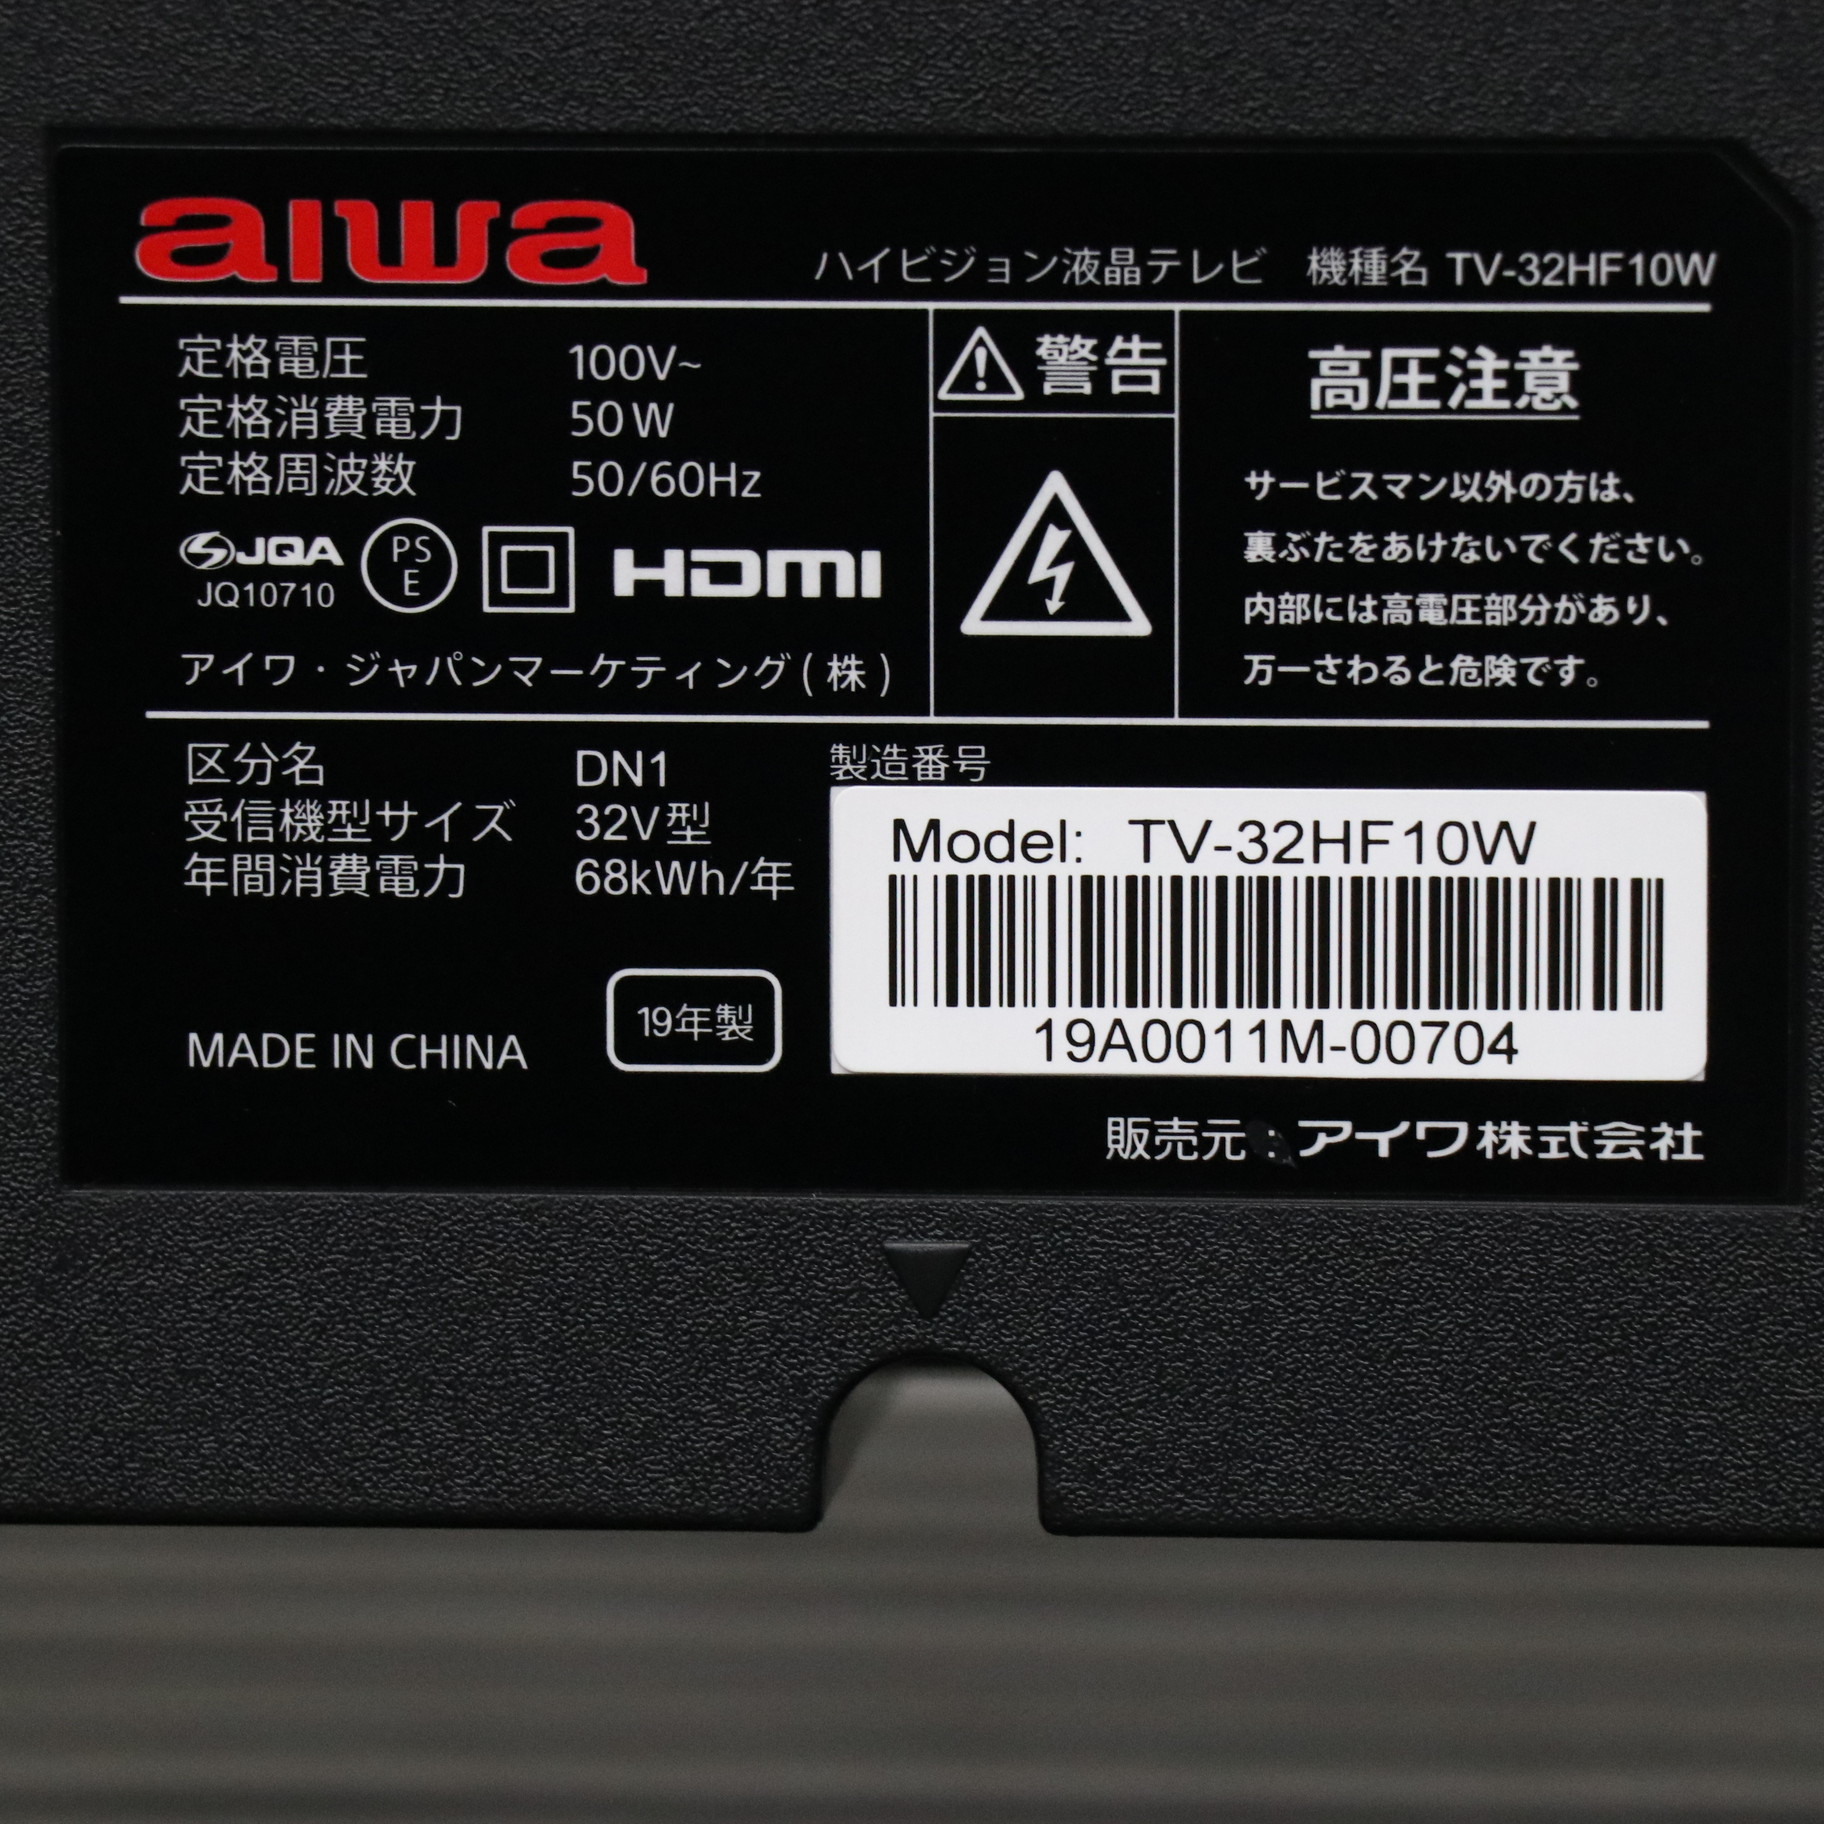 TV-32HF10W 液晶テレビ aiwa [32V型  ハイビジョン] - 1